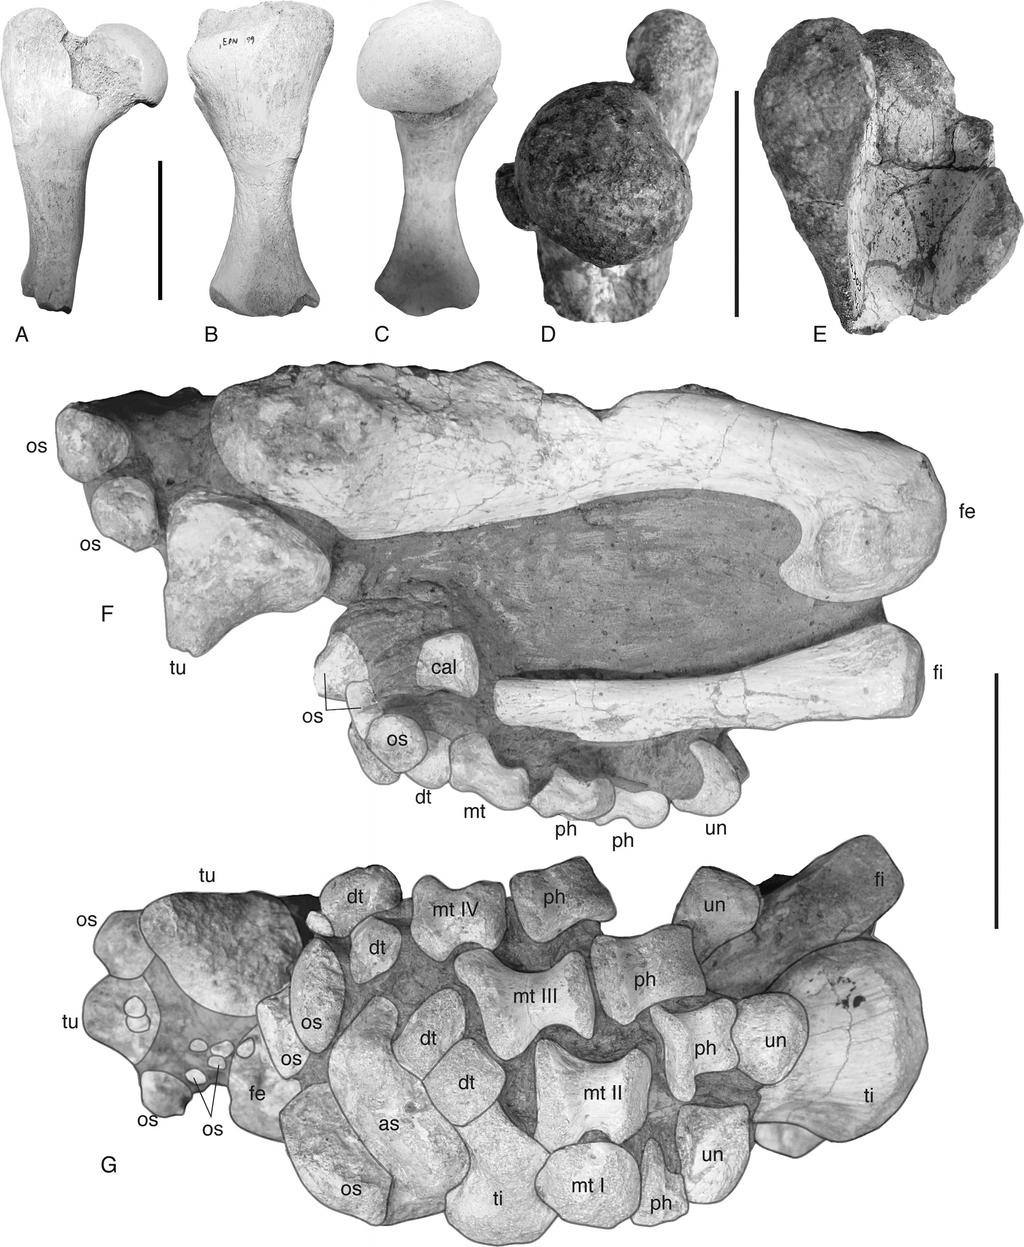 572 JOURNAL OF VERTEBRATE PALEONTOLOGY, VOL. 34, NO. 3, 2014 FIGURE 7. Cheirogaster bacharidisi, sp. nov., additional referred material, Pliocene. A C, EPN (additional material).